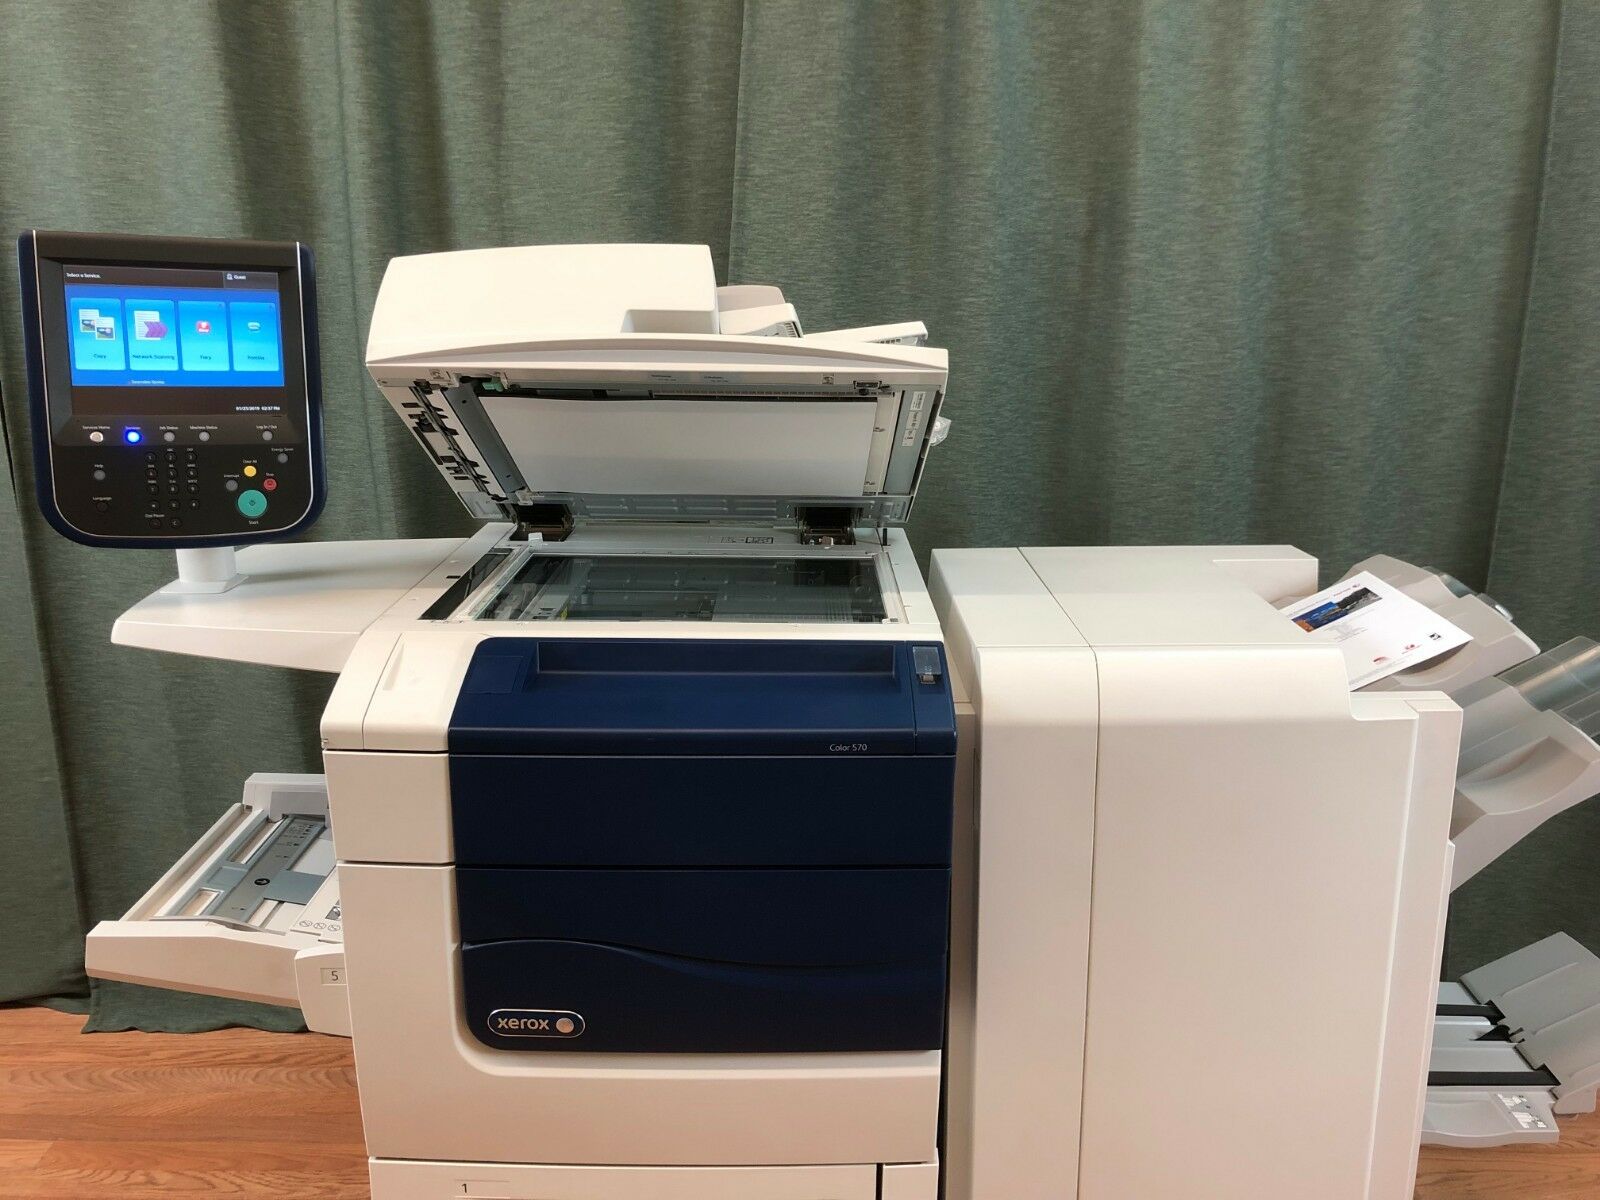 Xerox Color 570 Copier Printer Scanner Booklet Finisher Fiery Low Meter 137k - copier-clearance-center